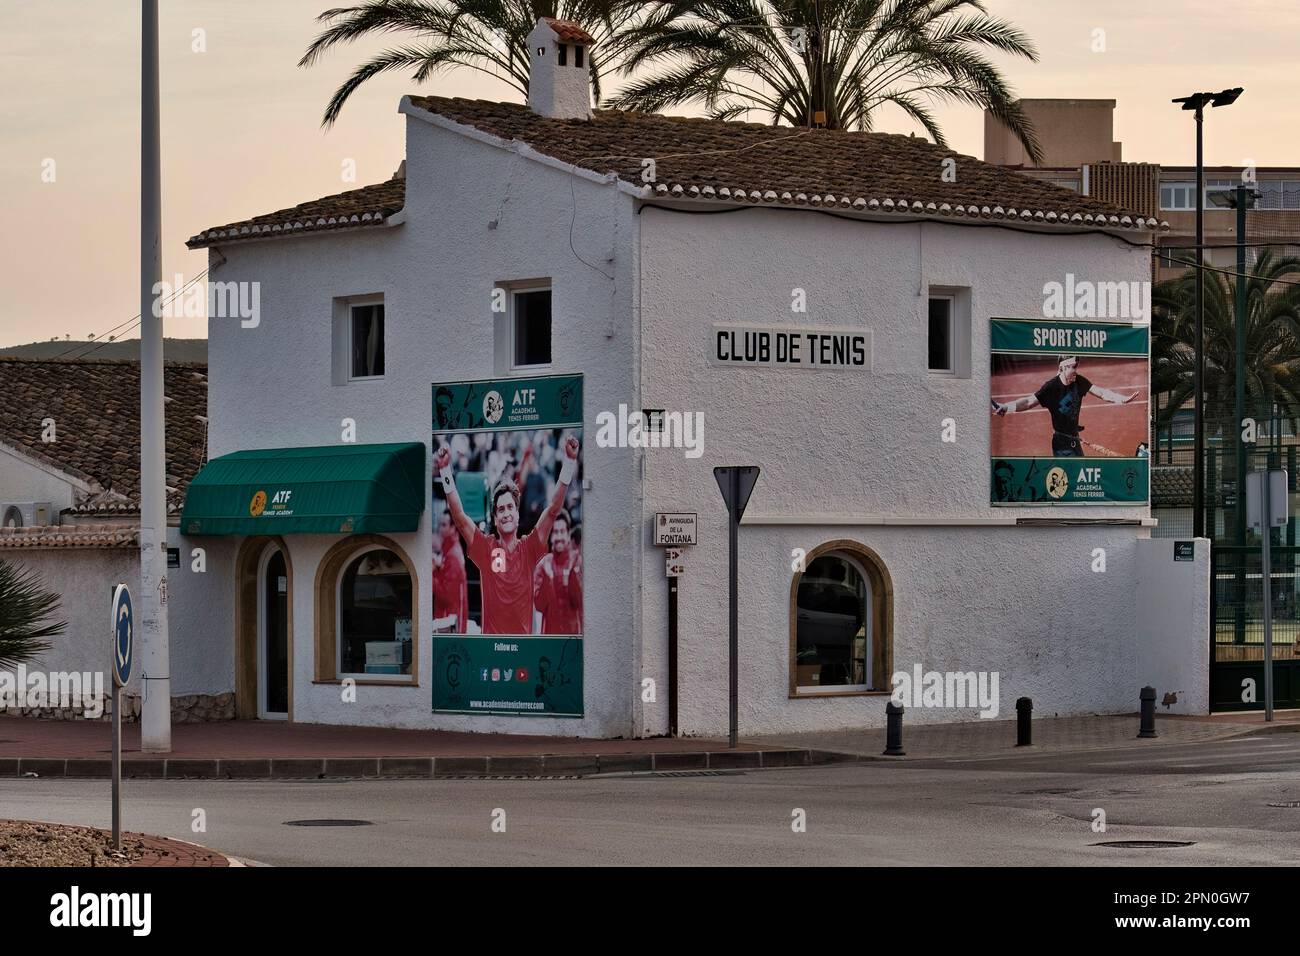 Ferrer Tennisclub und Akademie (ATF) Sportshop in Xabia (Javea) Alicante (Alacant) Comunitat Valenciana (Valencian Community), Spanien, Europa Stockfoto